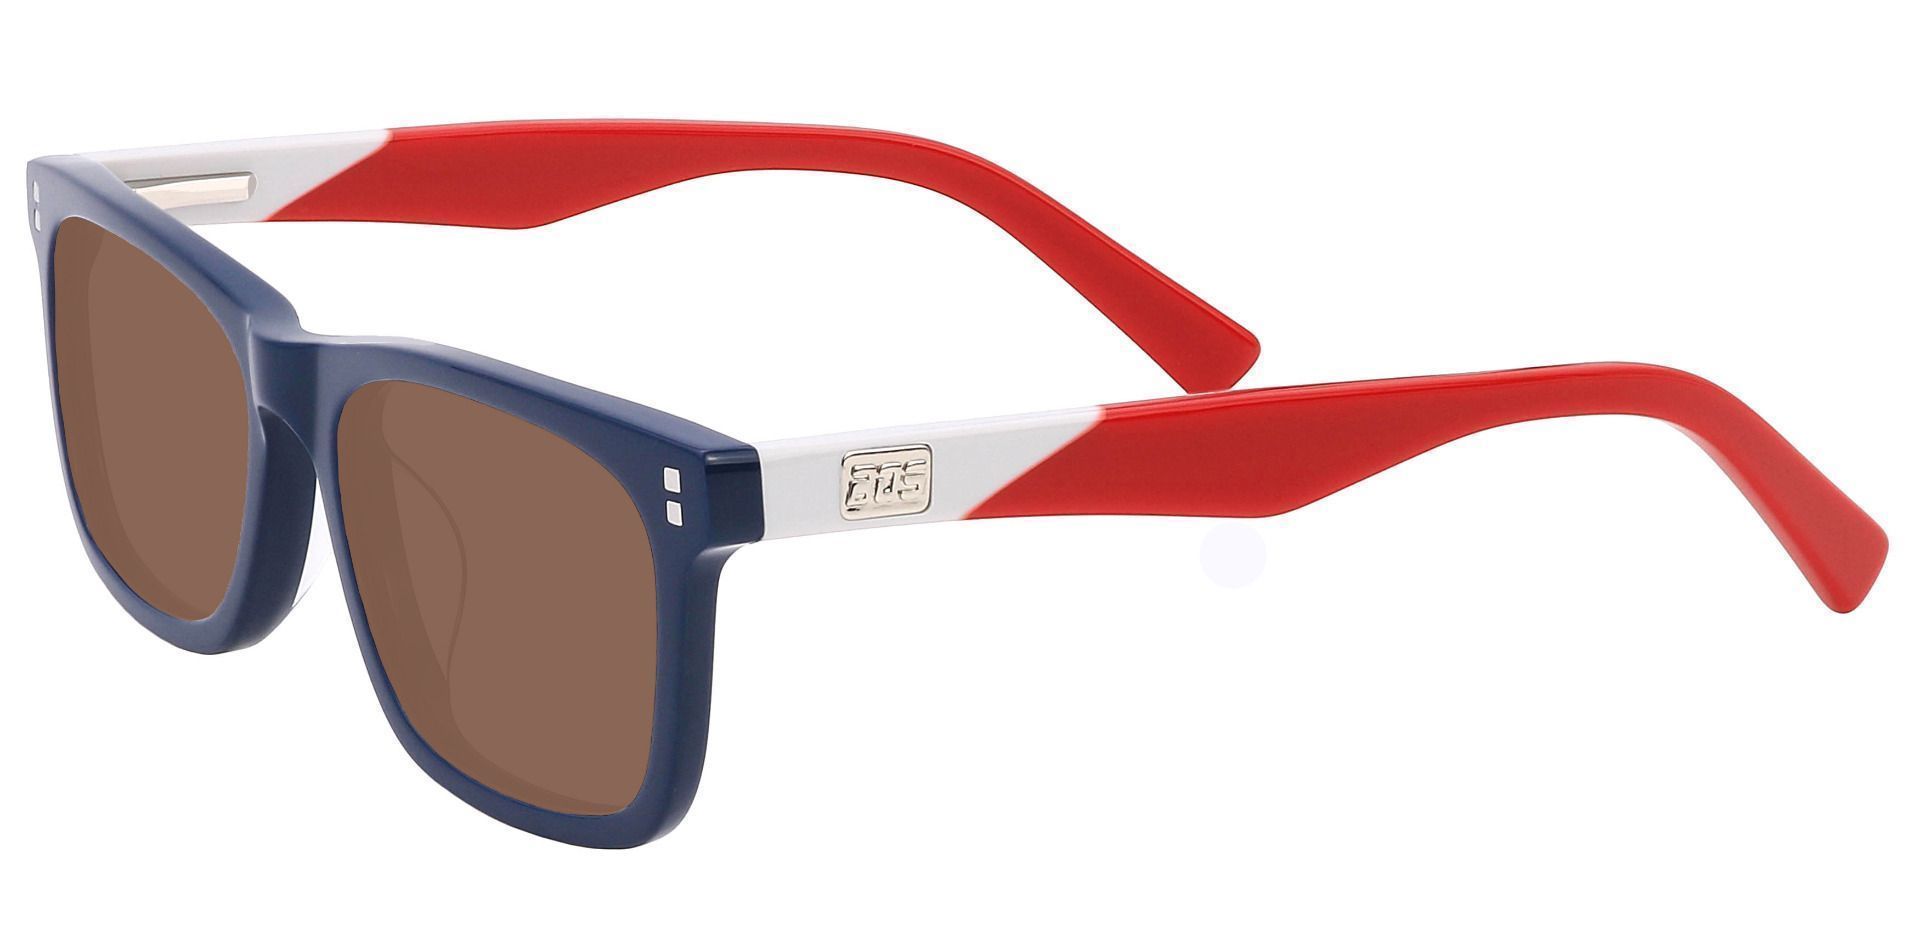 Harbor Rectangle Prescription Sunglasses - Blue Frame With Brown Lenses